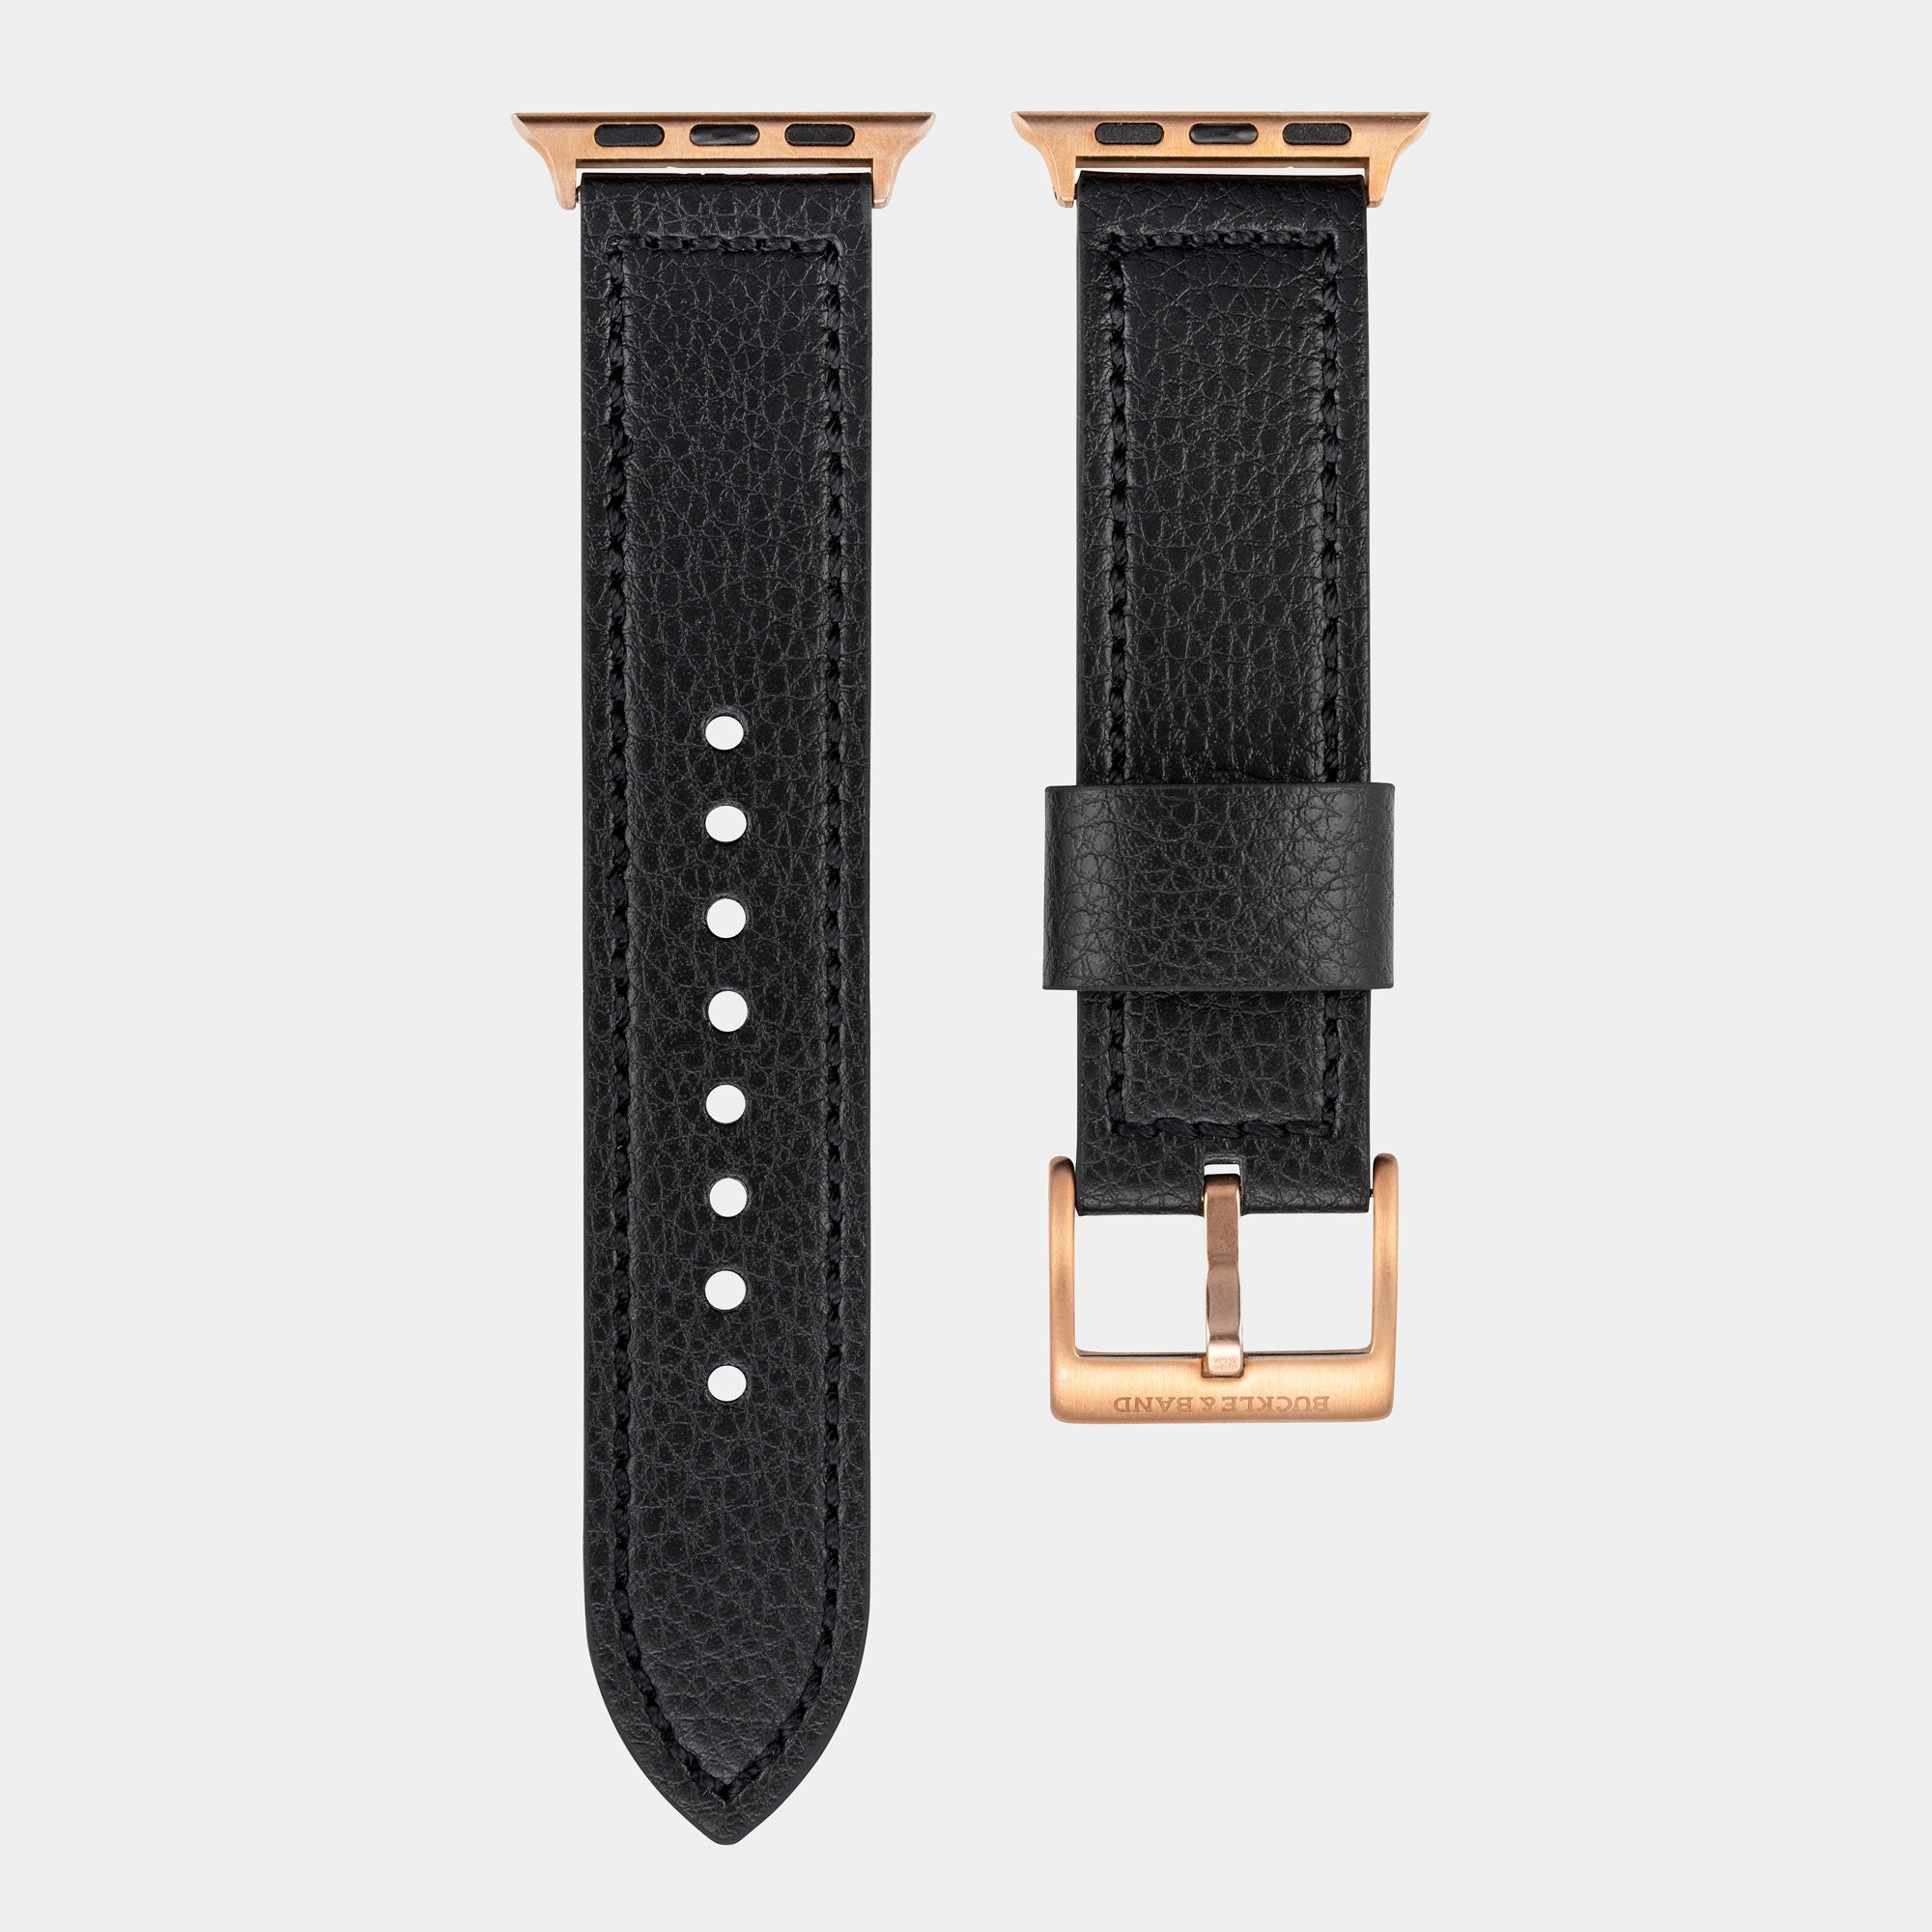 Vegan Leather Apple Watch Strap - Luxury Lond Black - Buckle & Band - VEG-38-BLK-GL